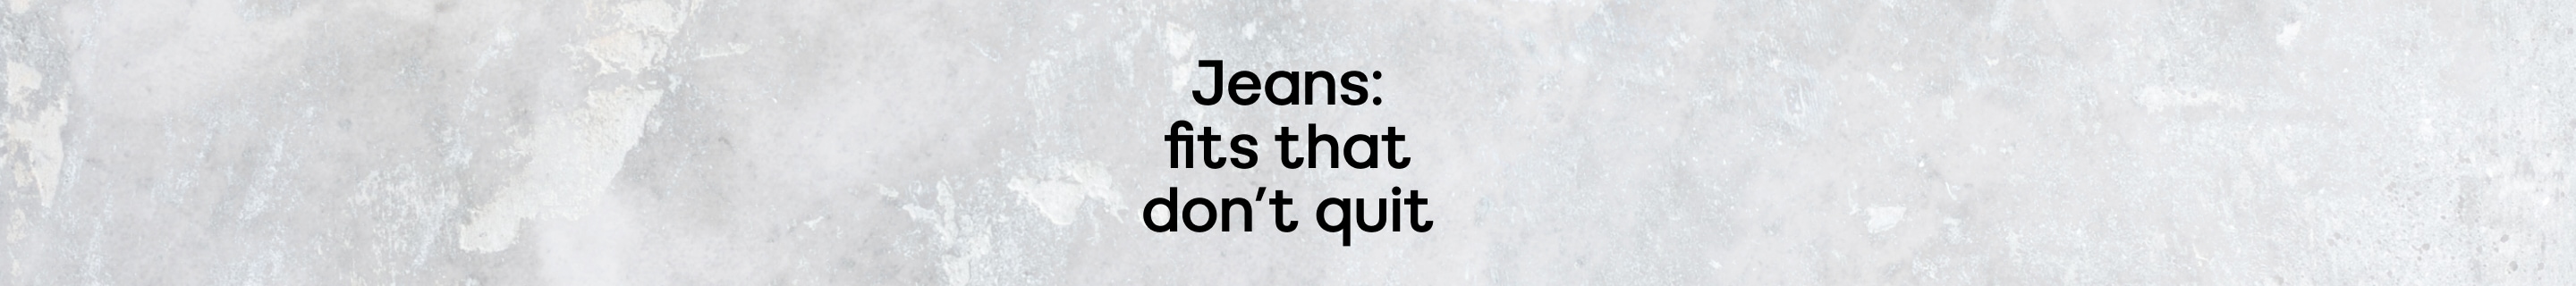 Jeans: fits that don't quit